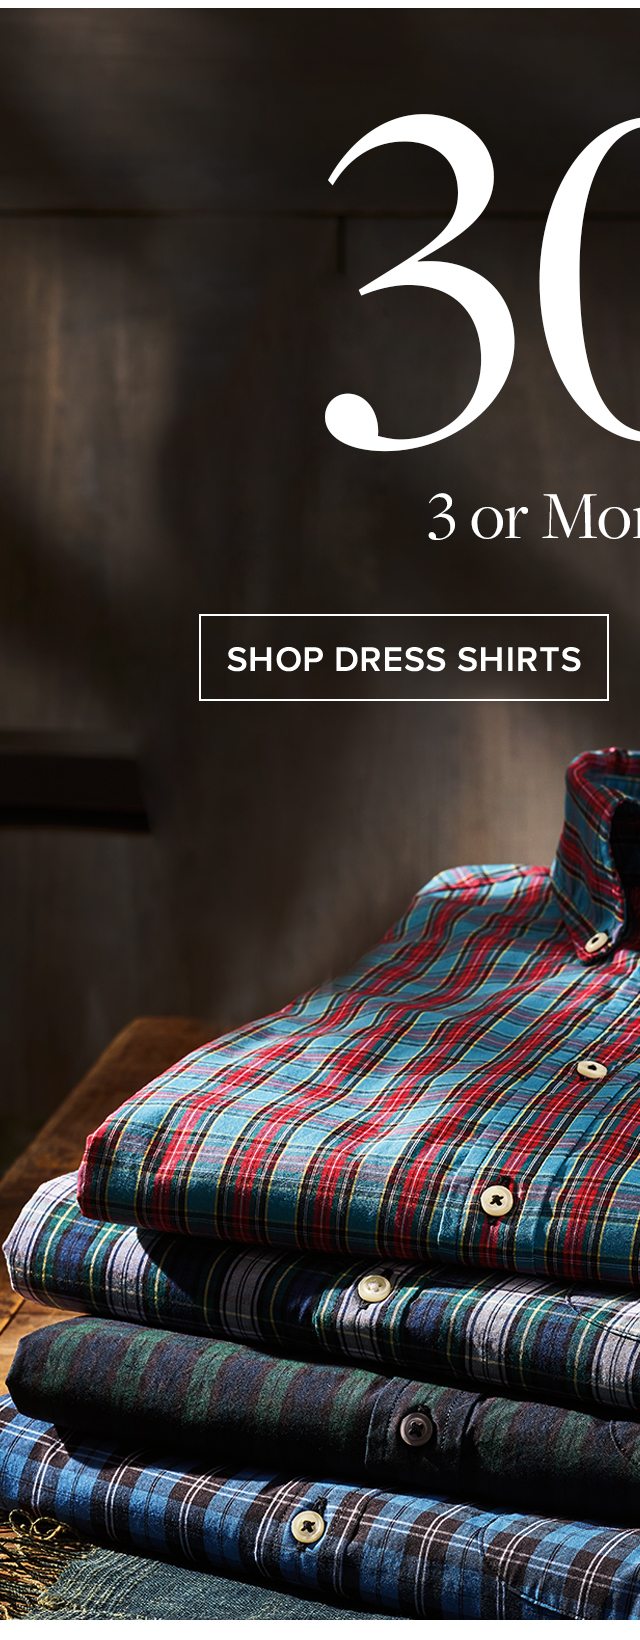 30% off 3 or More Shirts Shop Dress Shirts